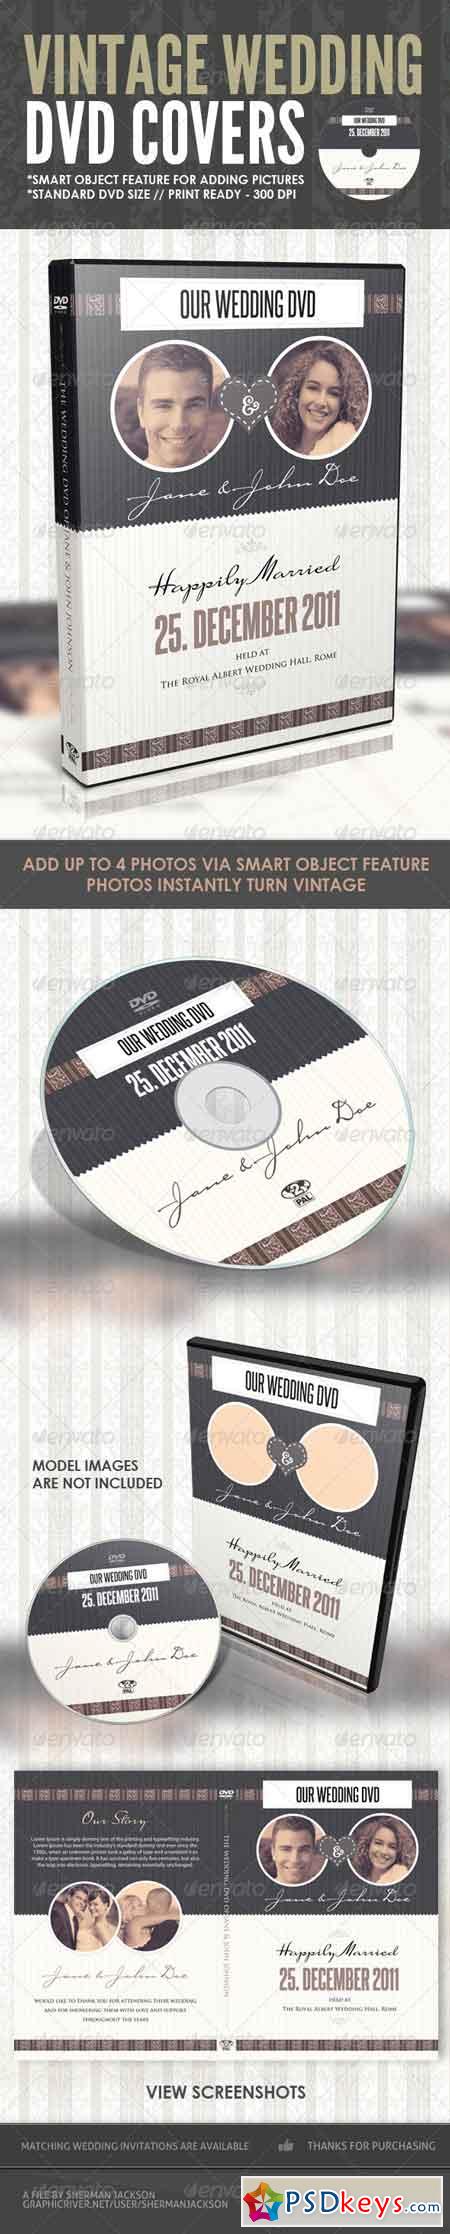 Vintage Wedding DVD Covers & Disc Label 1031303